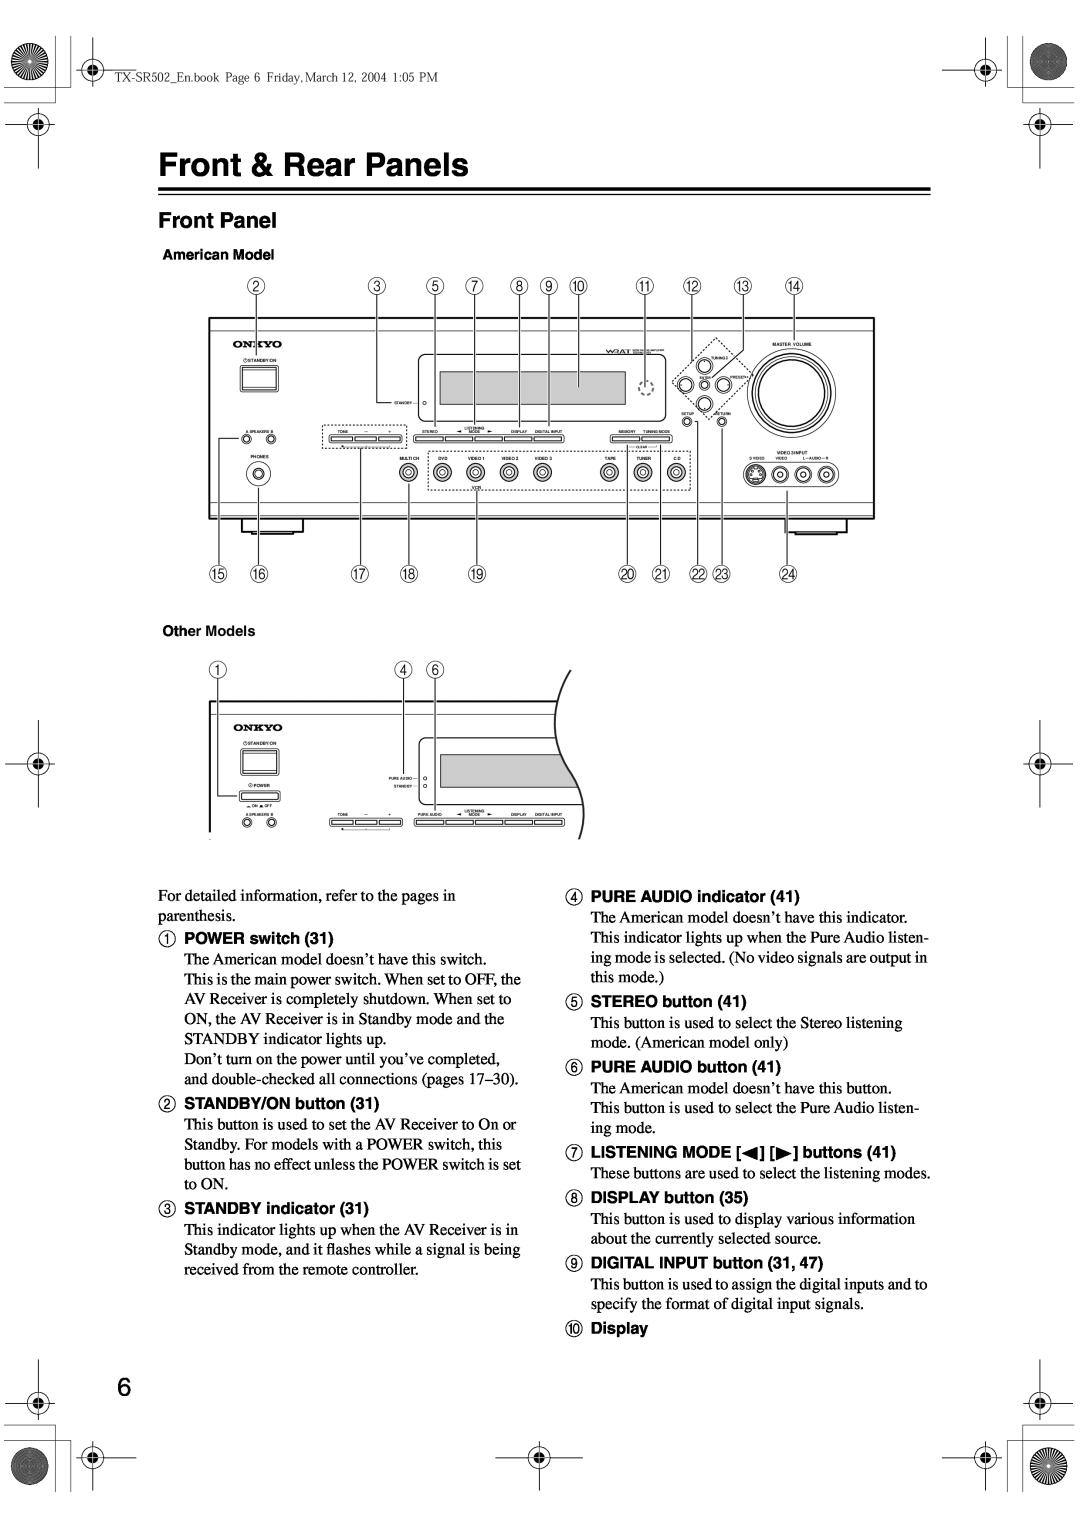 Onkyo TX-SR502E, TX-SR8250 instruction manual Front & Rear Panels, Front Panel, C 5 G H I J K L M N, T U V W 